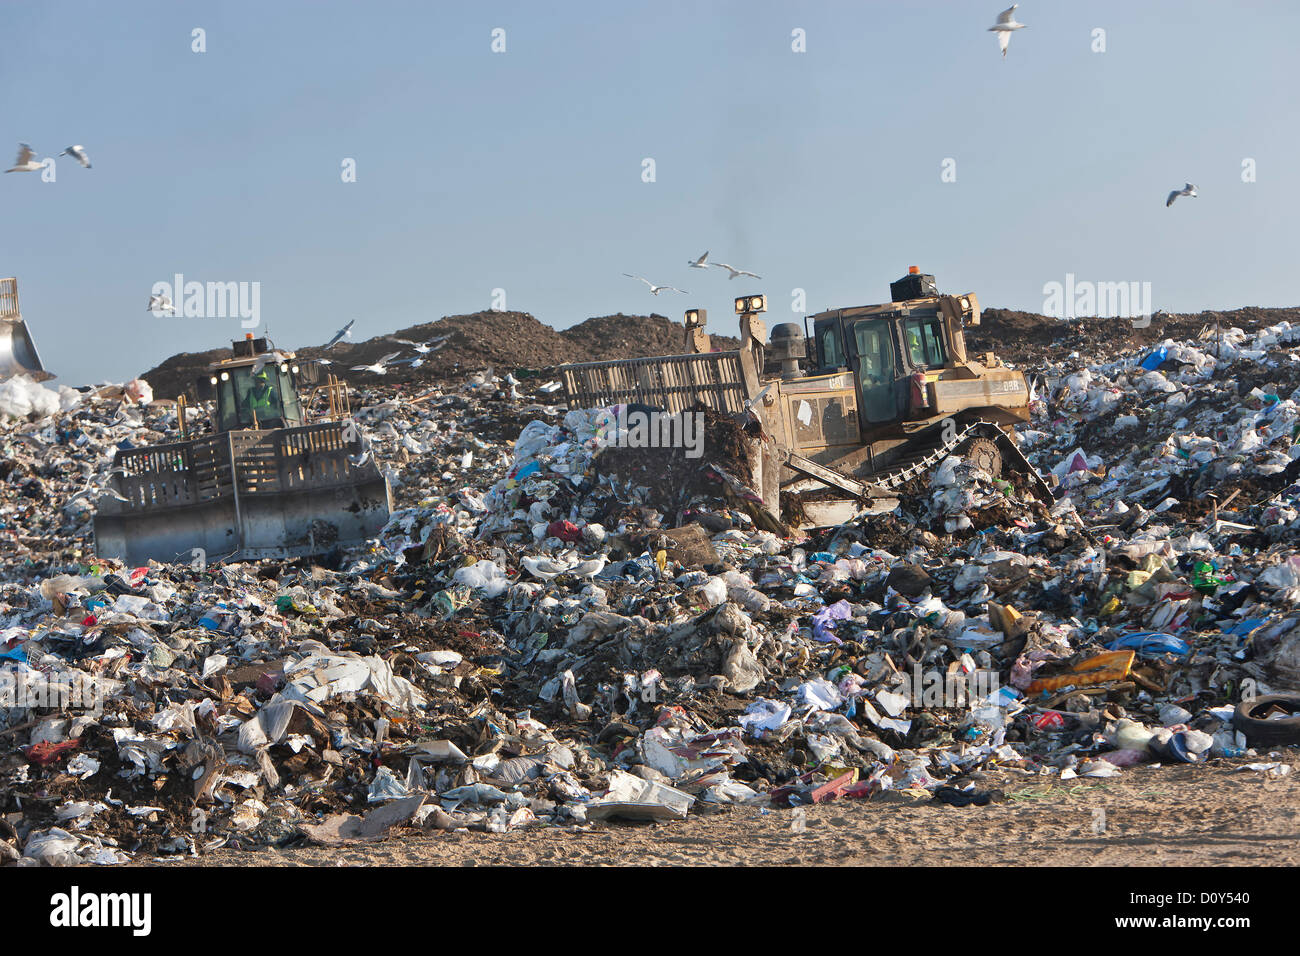 Tractor compactor/dozer 'track laying' pushing trash at landfill, California. Stock Photo